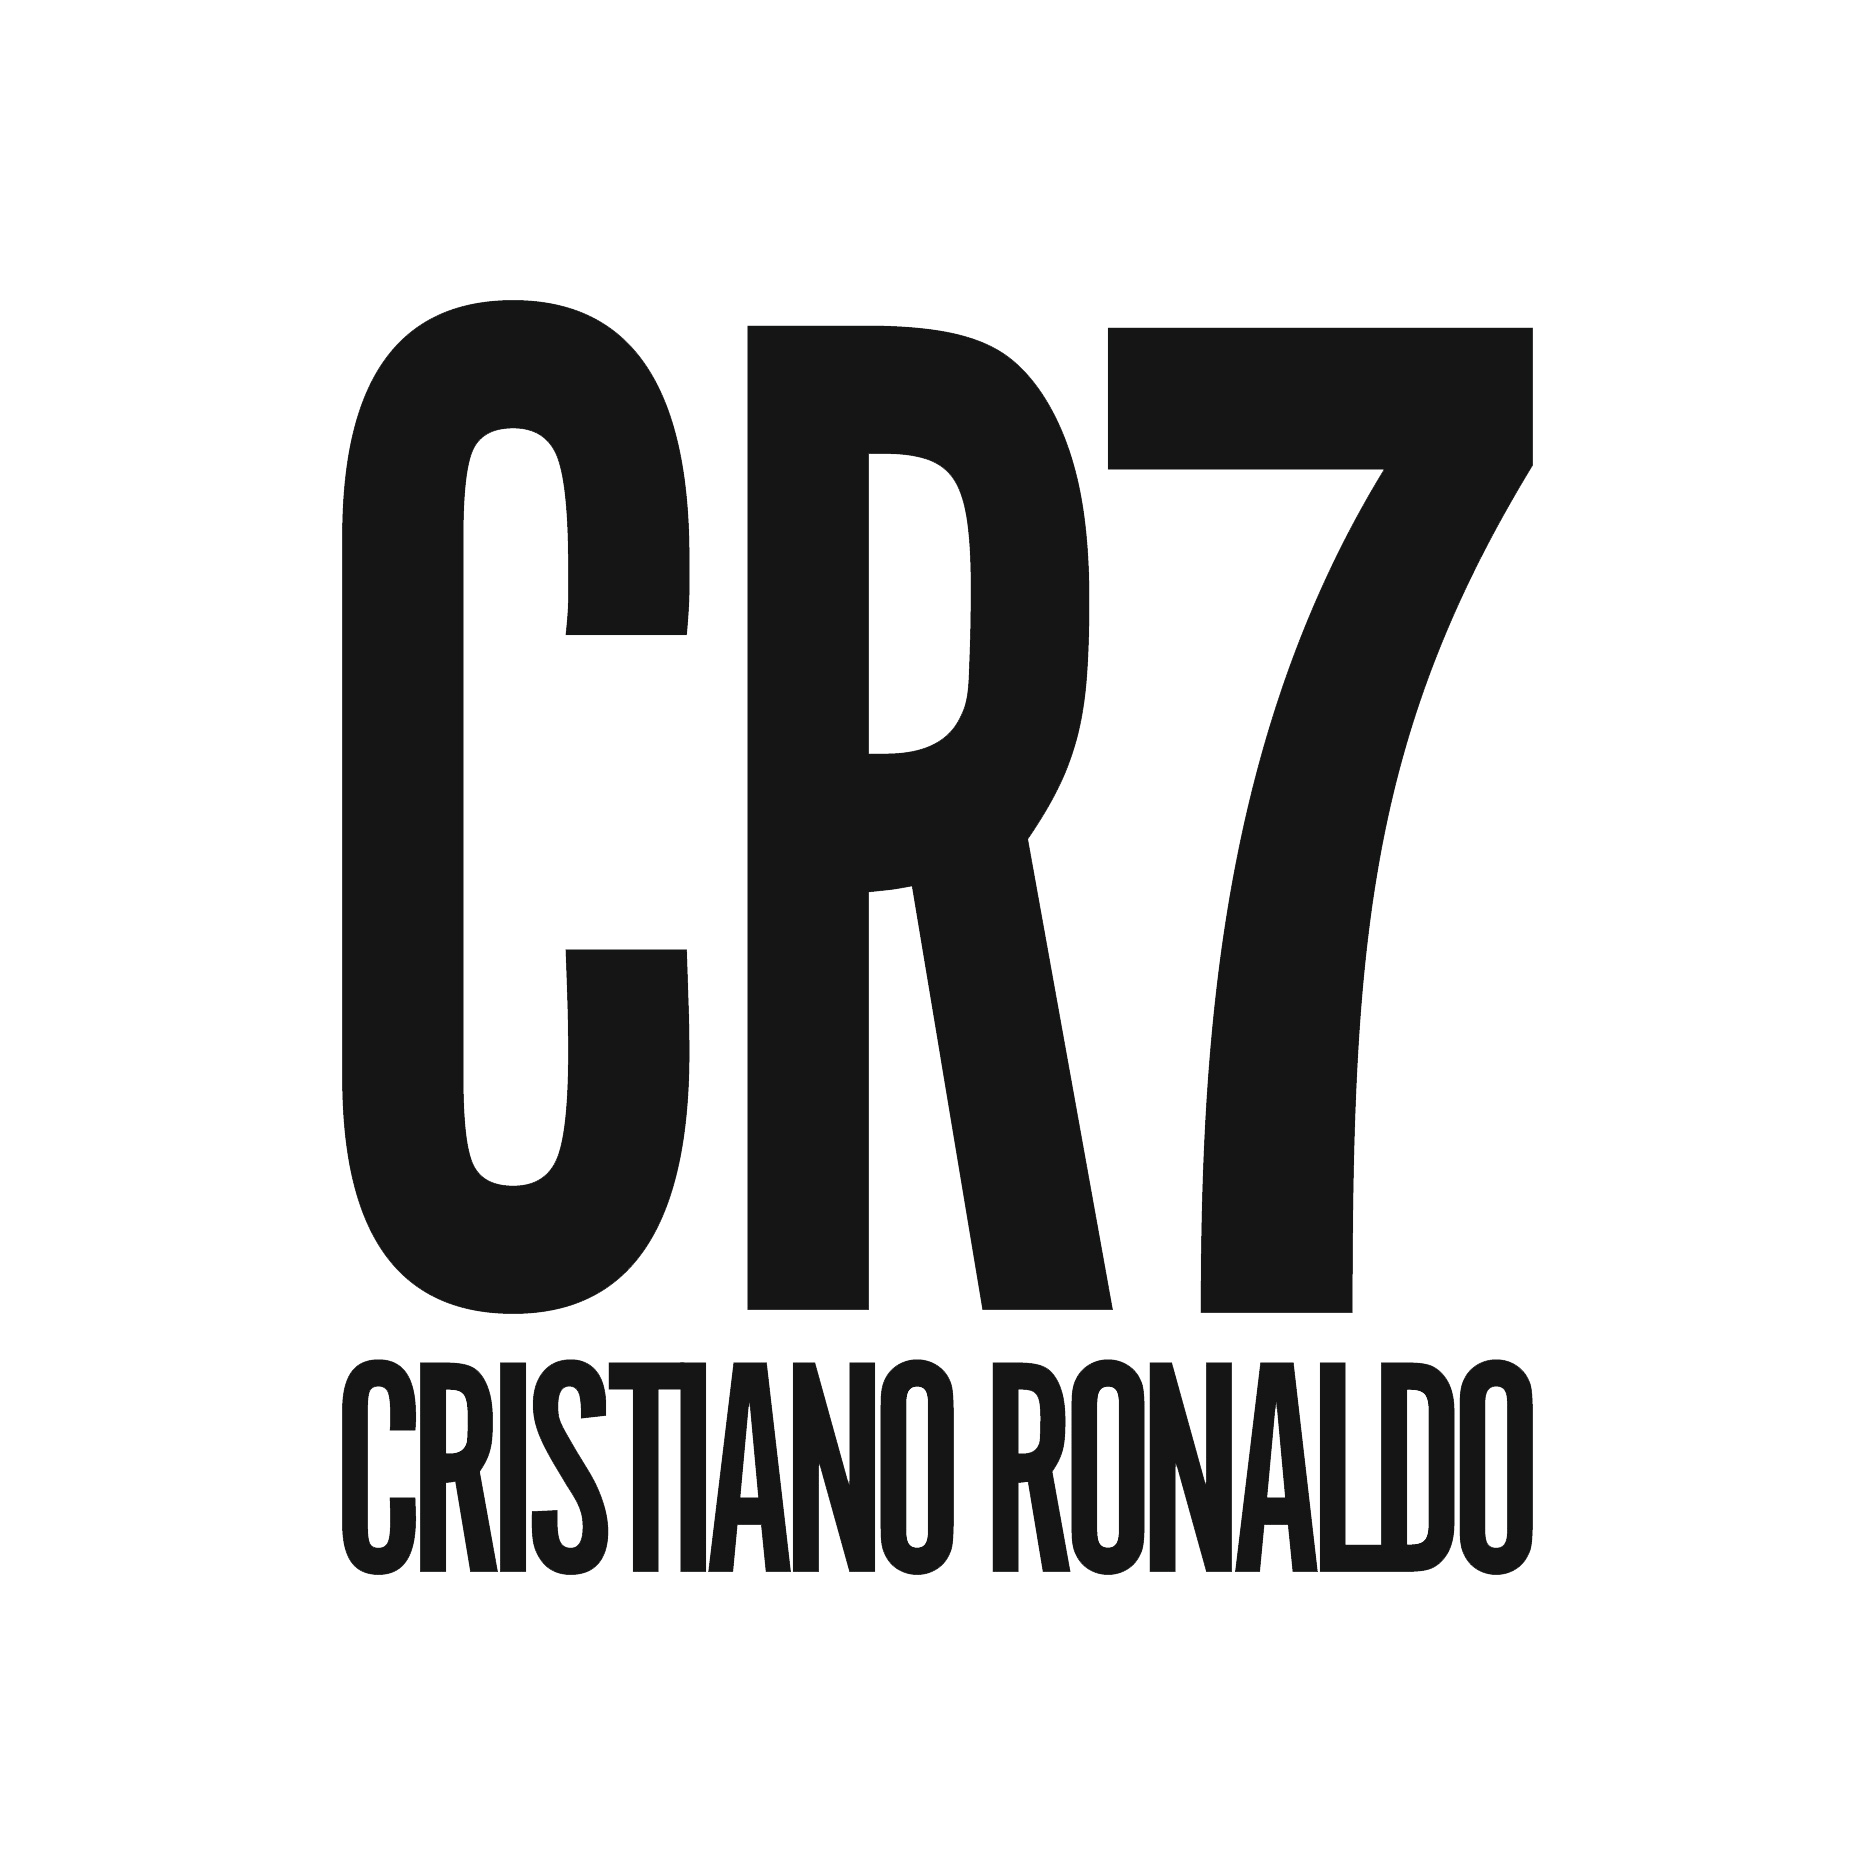 CR7 Logo - CR7 Logo Cristiano Ronaldo Png